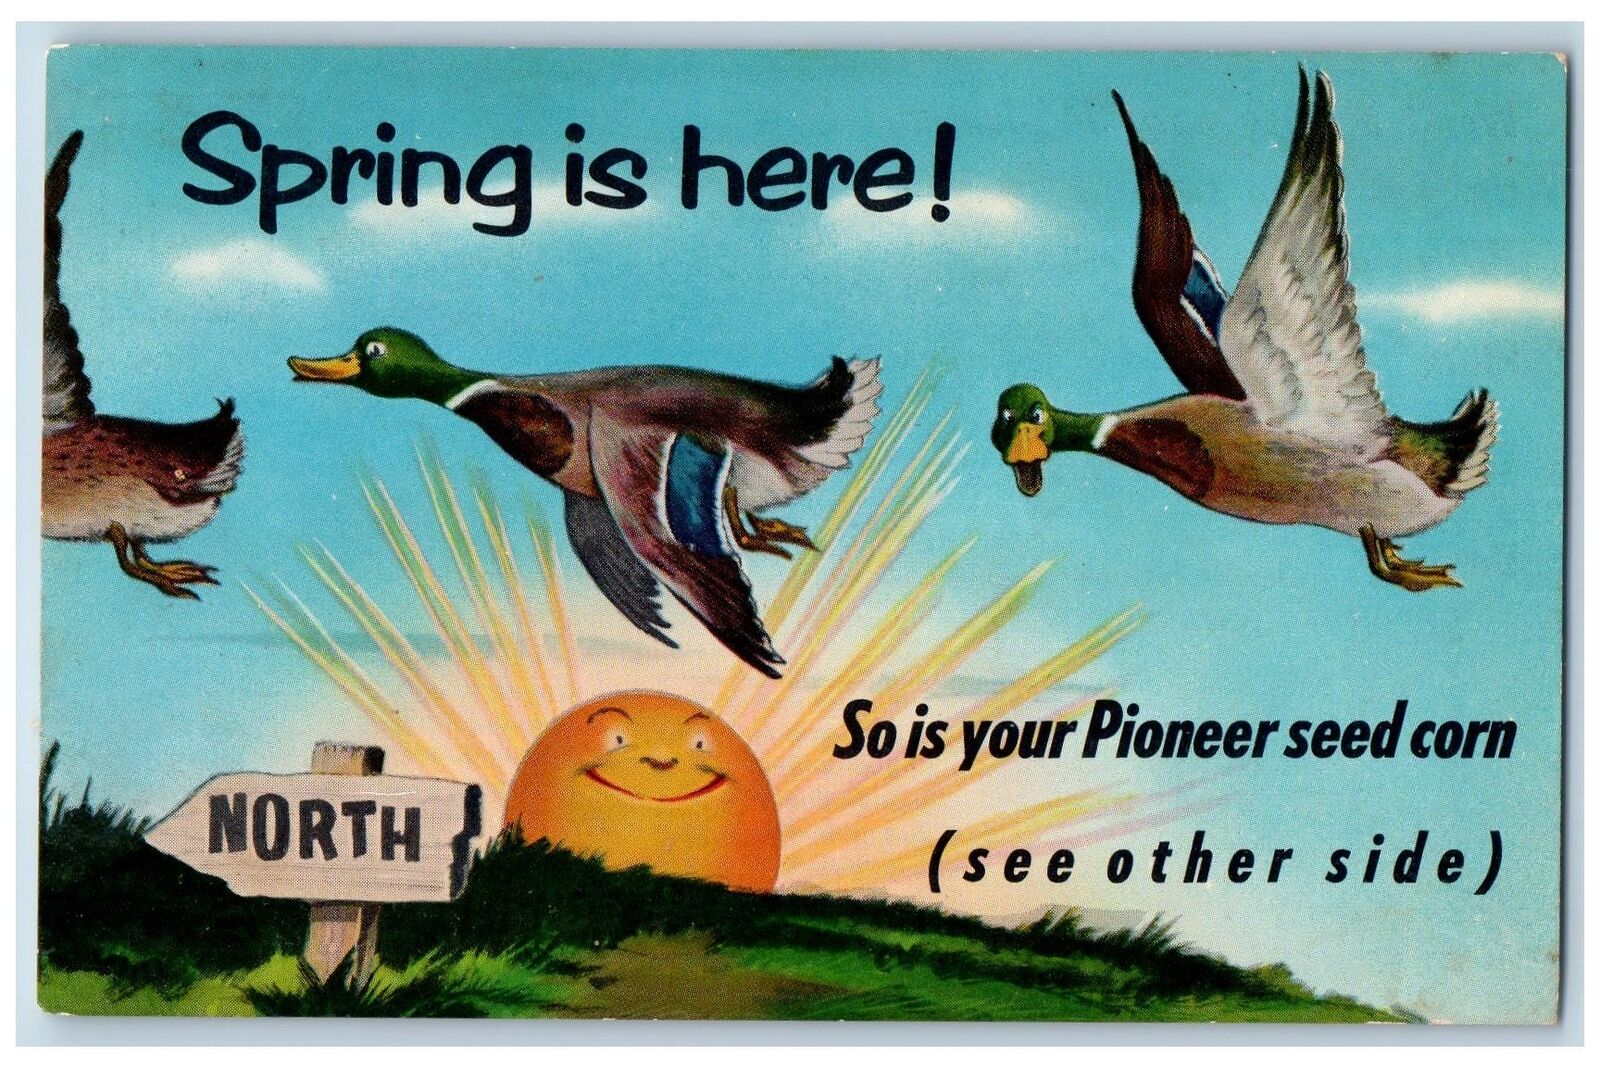 Dow City California Postcard Advertising Crow Seed Pioneer Hybrid Seed Corn 1957